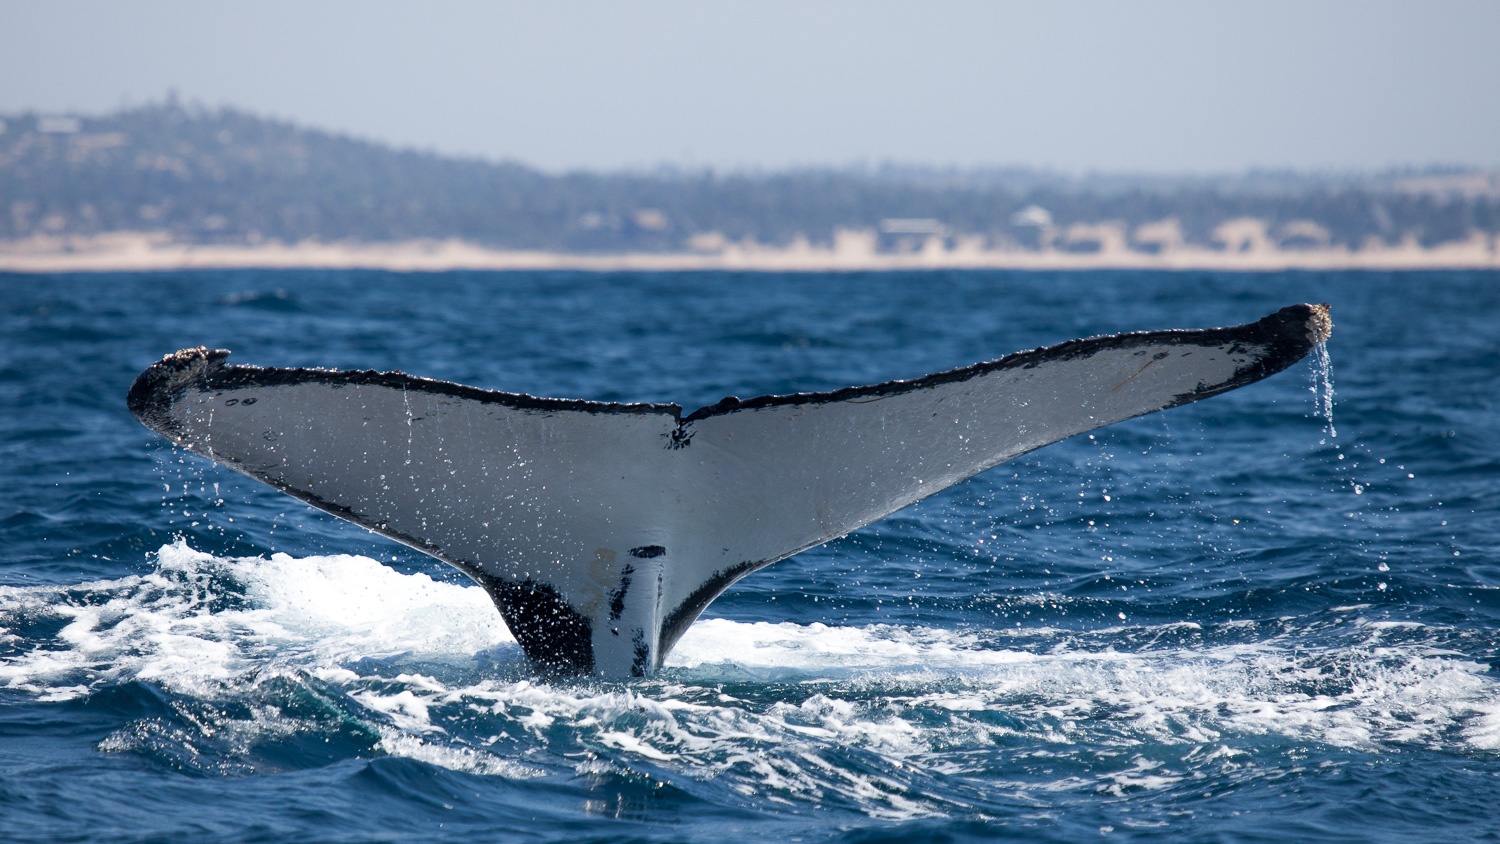 Baleia jubarte / Humpback whale / Megaptera novaeangliae